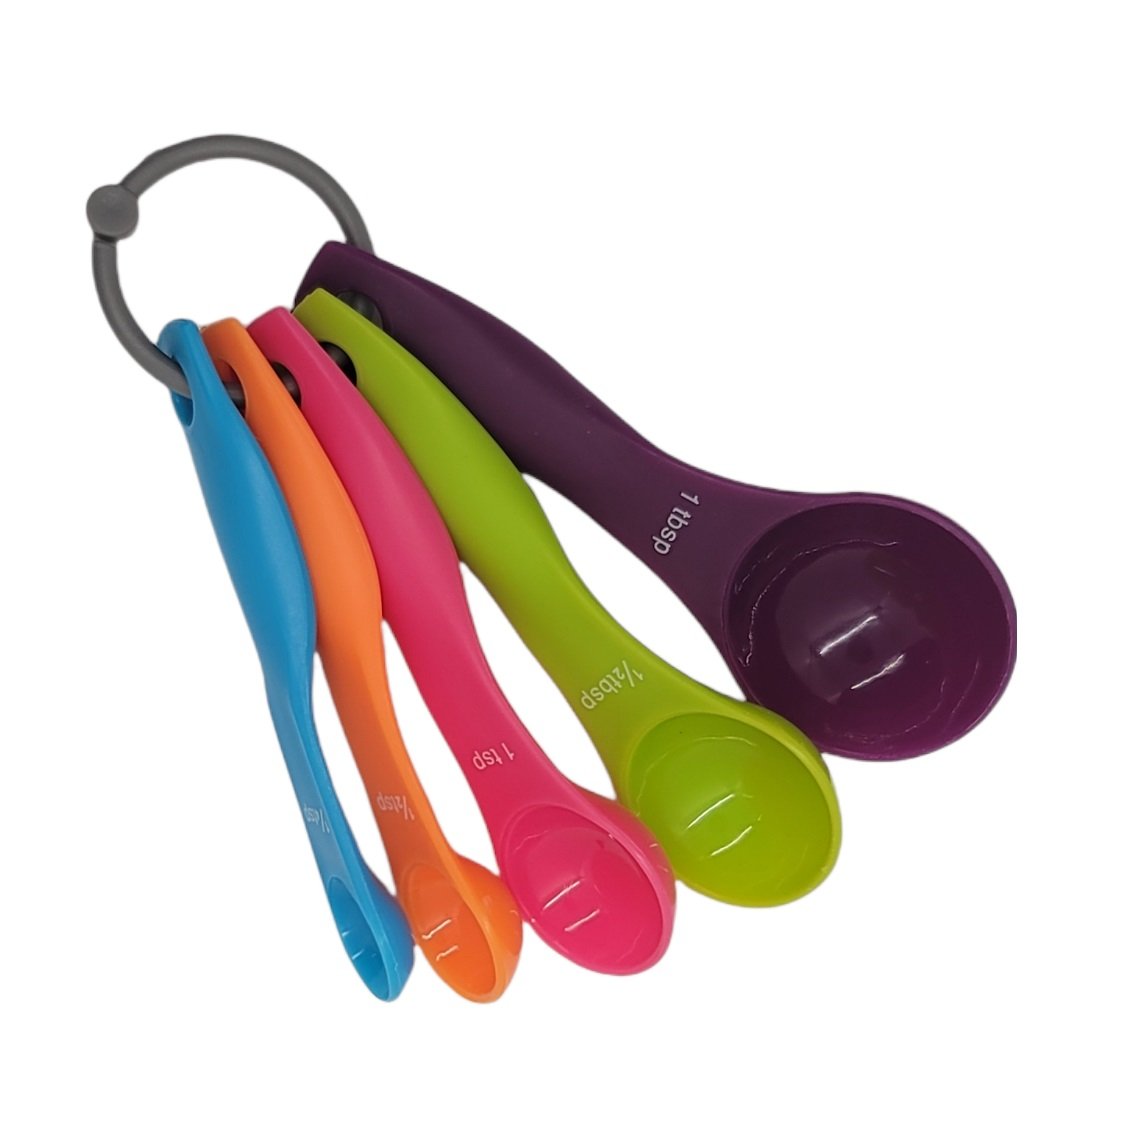 Measuring Spoons Plastic